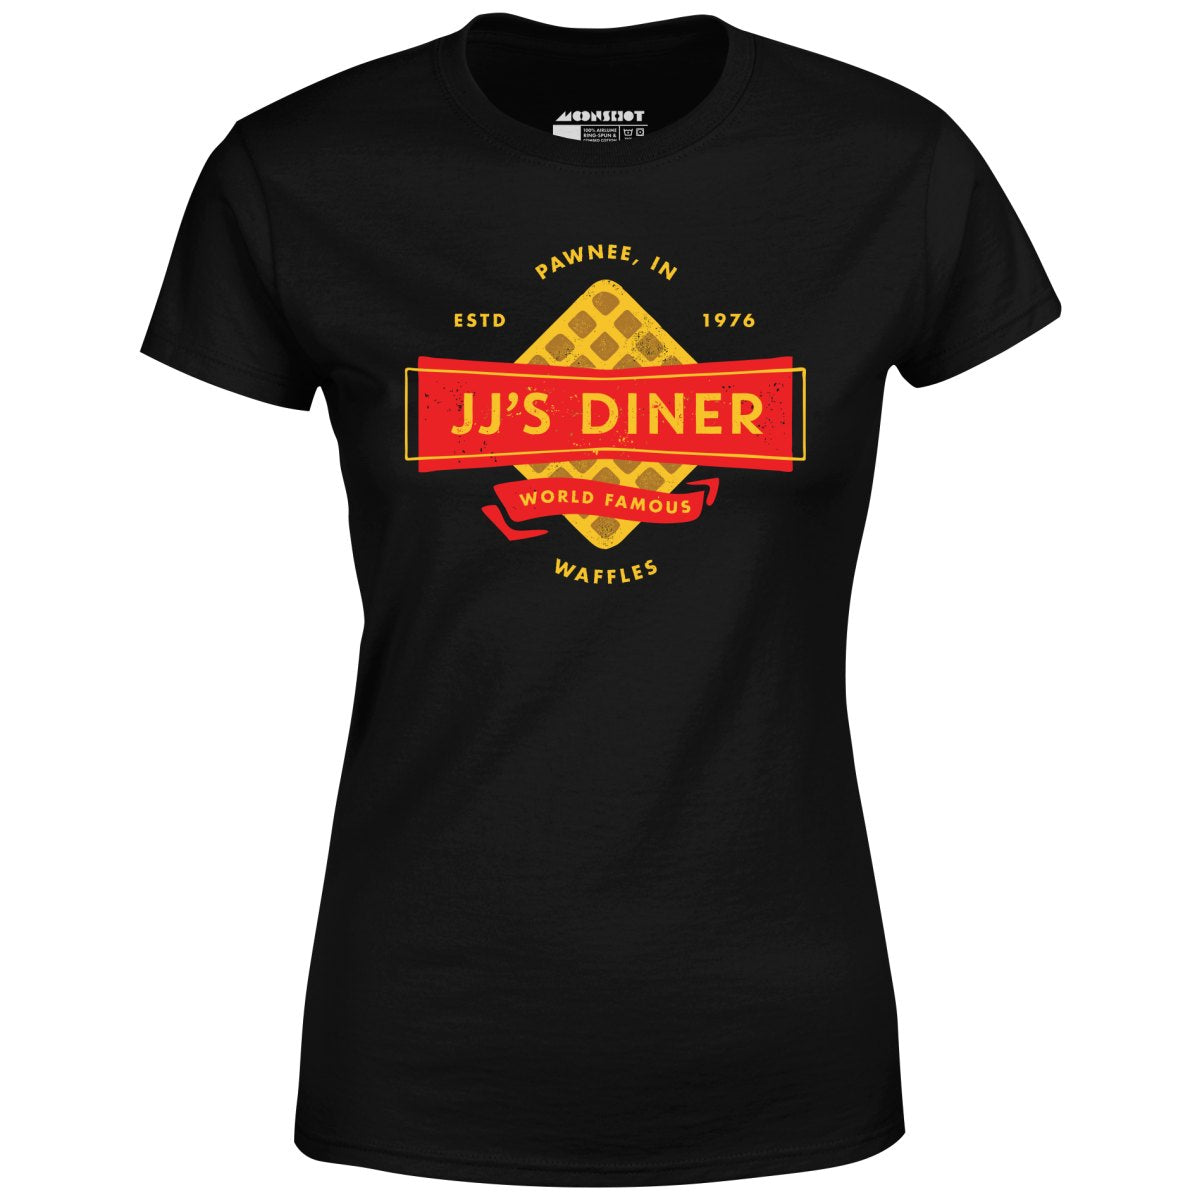 JJ's Diner - Parks and Recreation - Women's T-Shirt